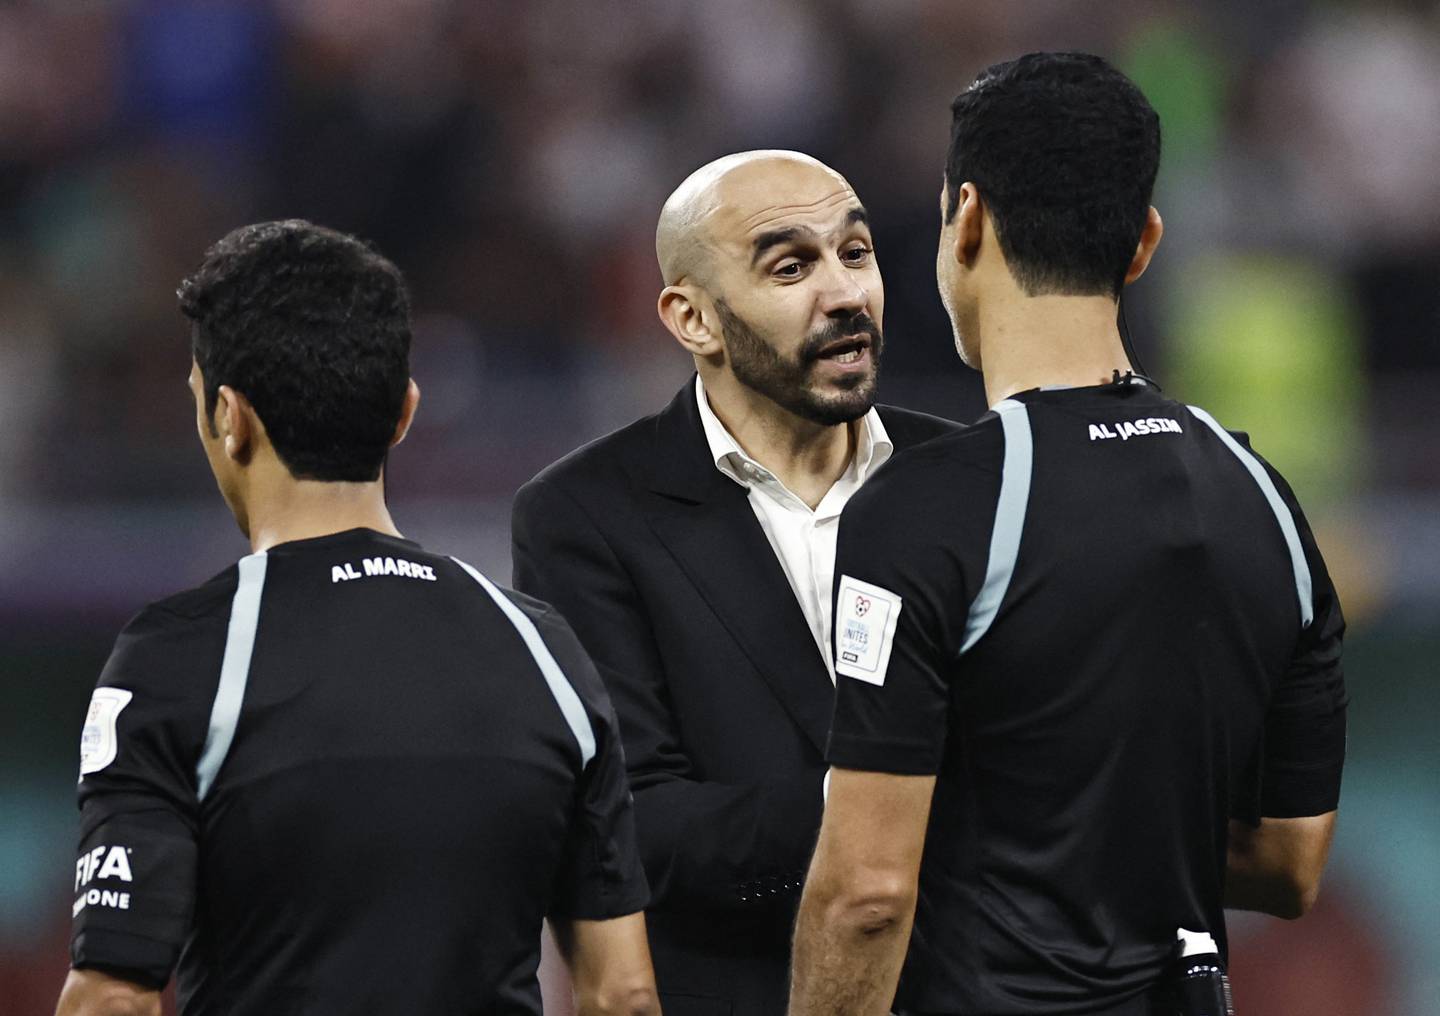 Morocco coach Walid Regragui talks with referee Abdulrahman Al Jassim after the match. Reuters